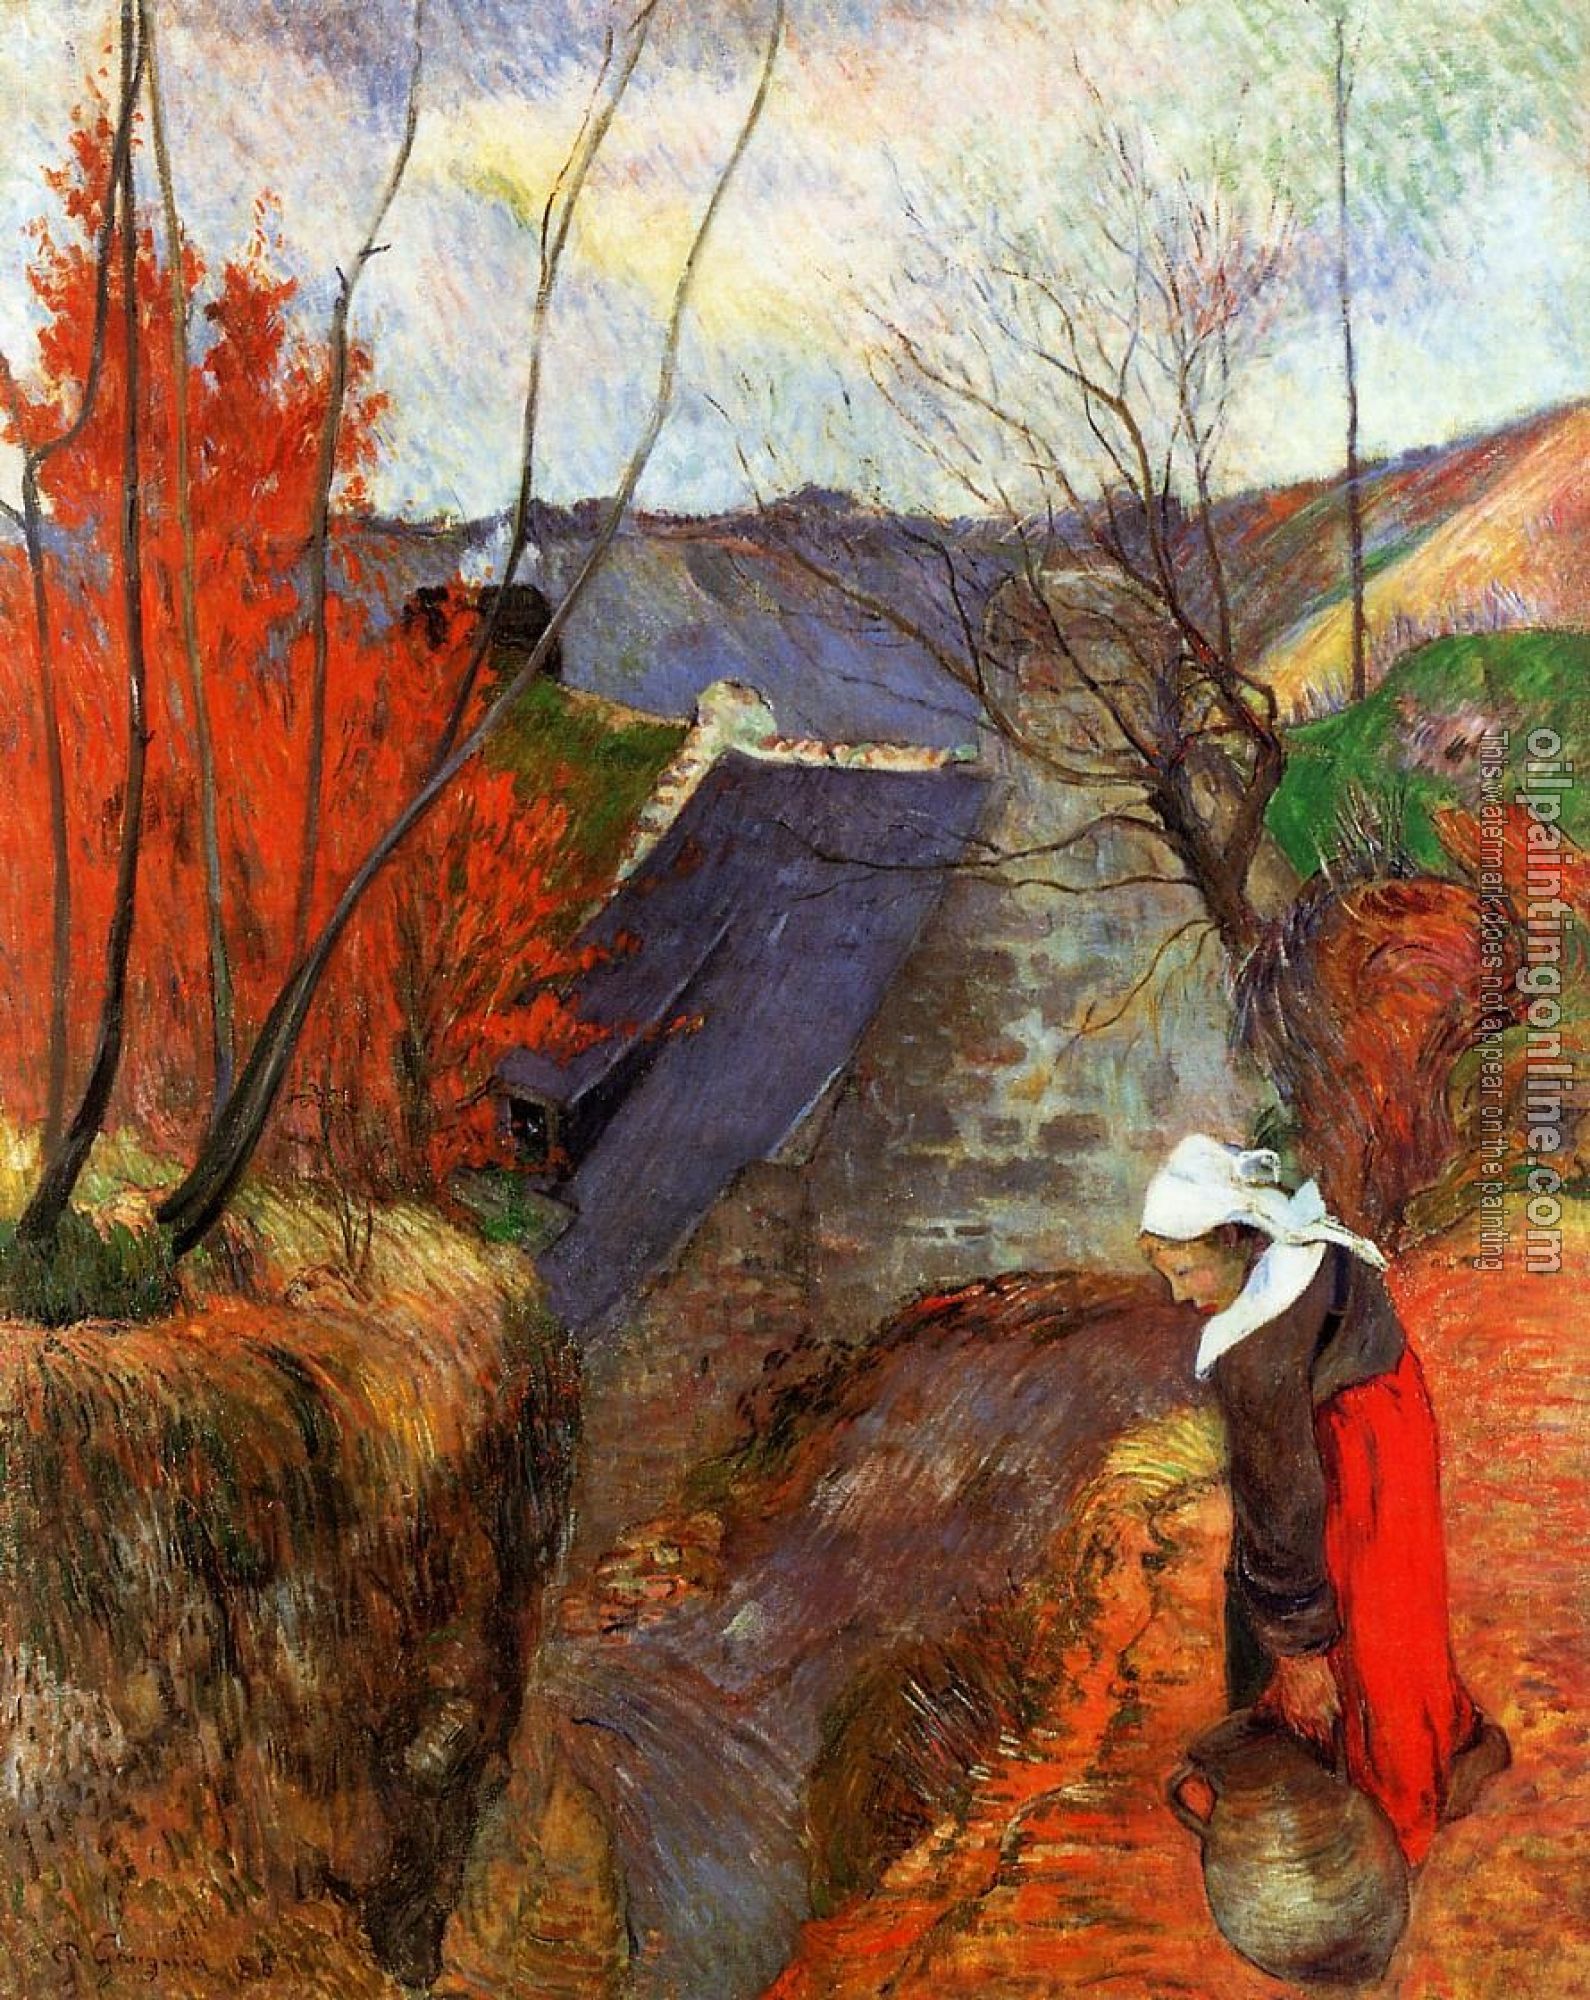 Gauguin, Paul - Breton Woman with Pitcher